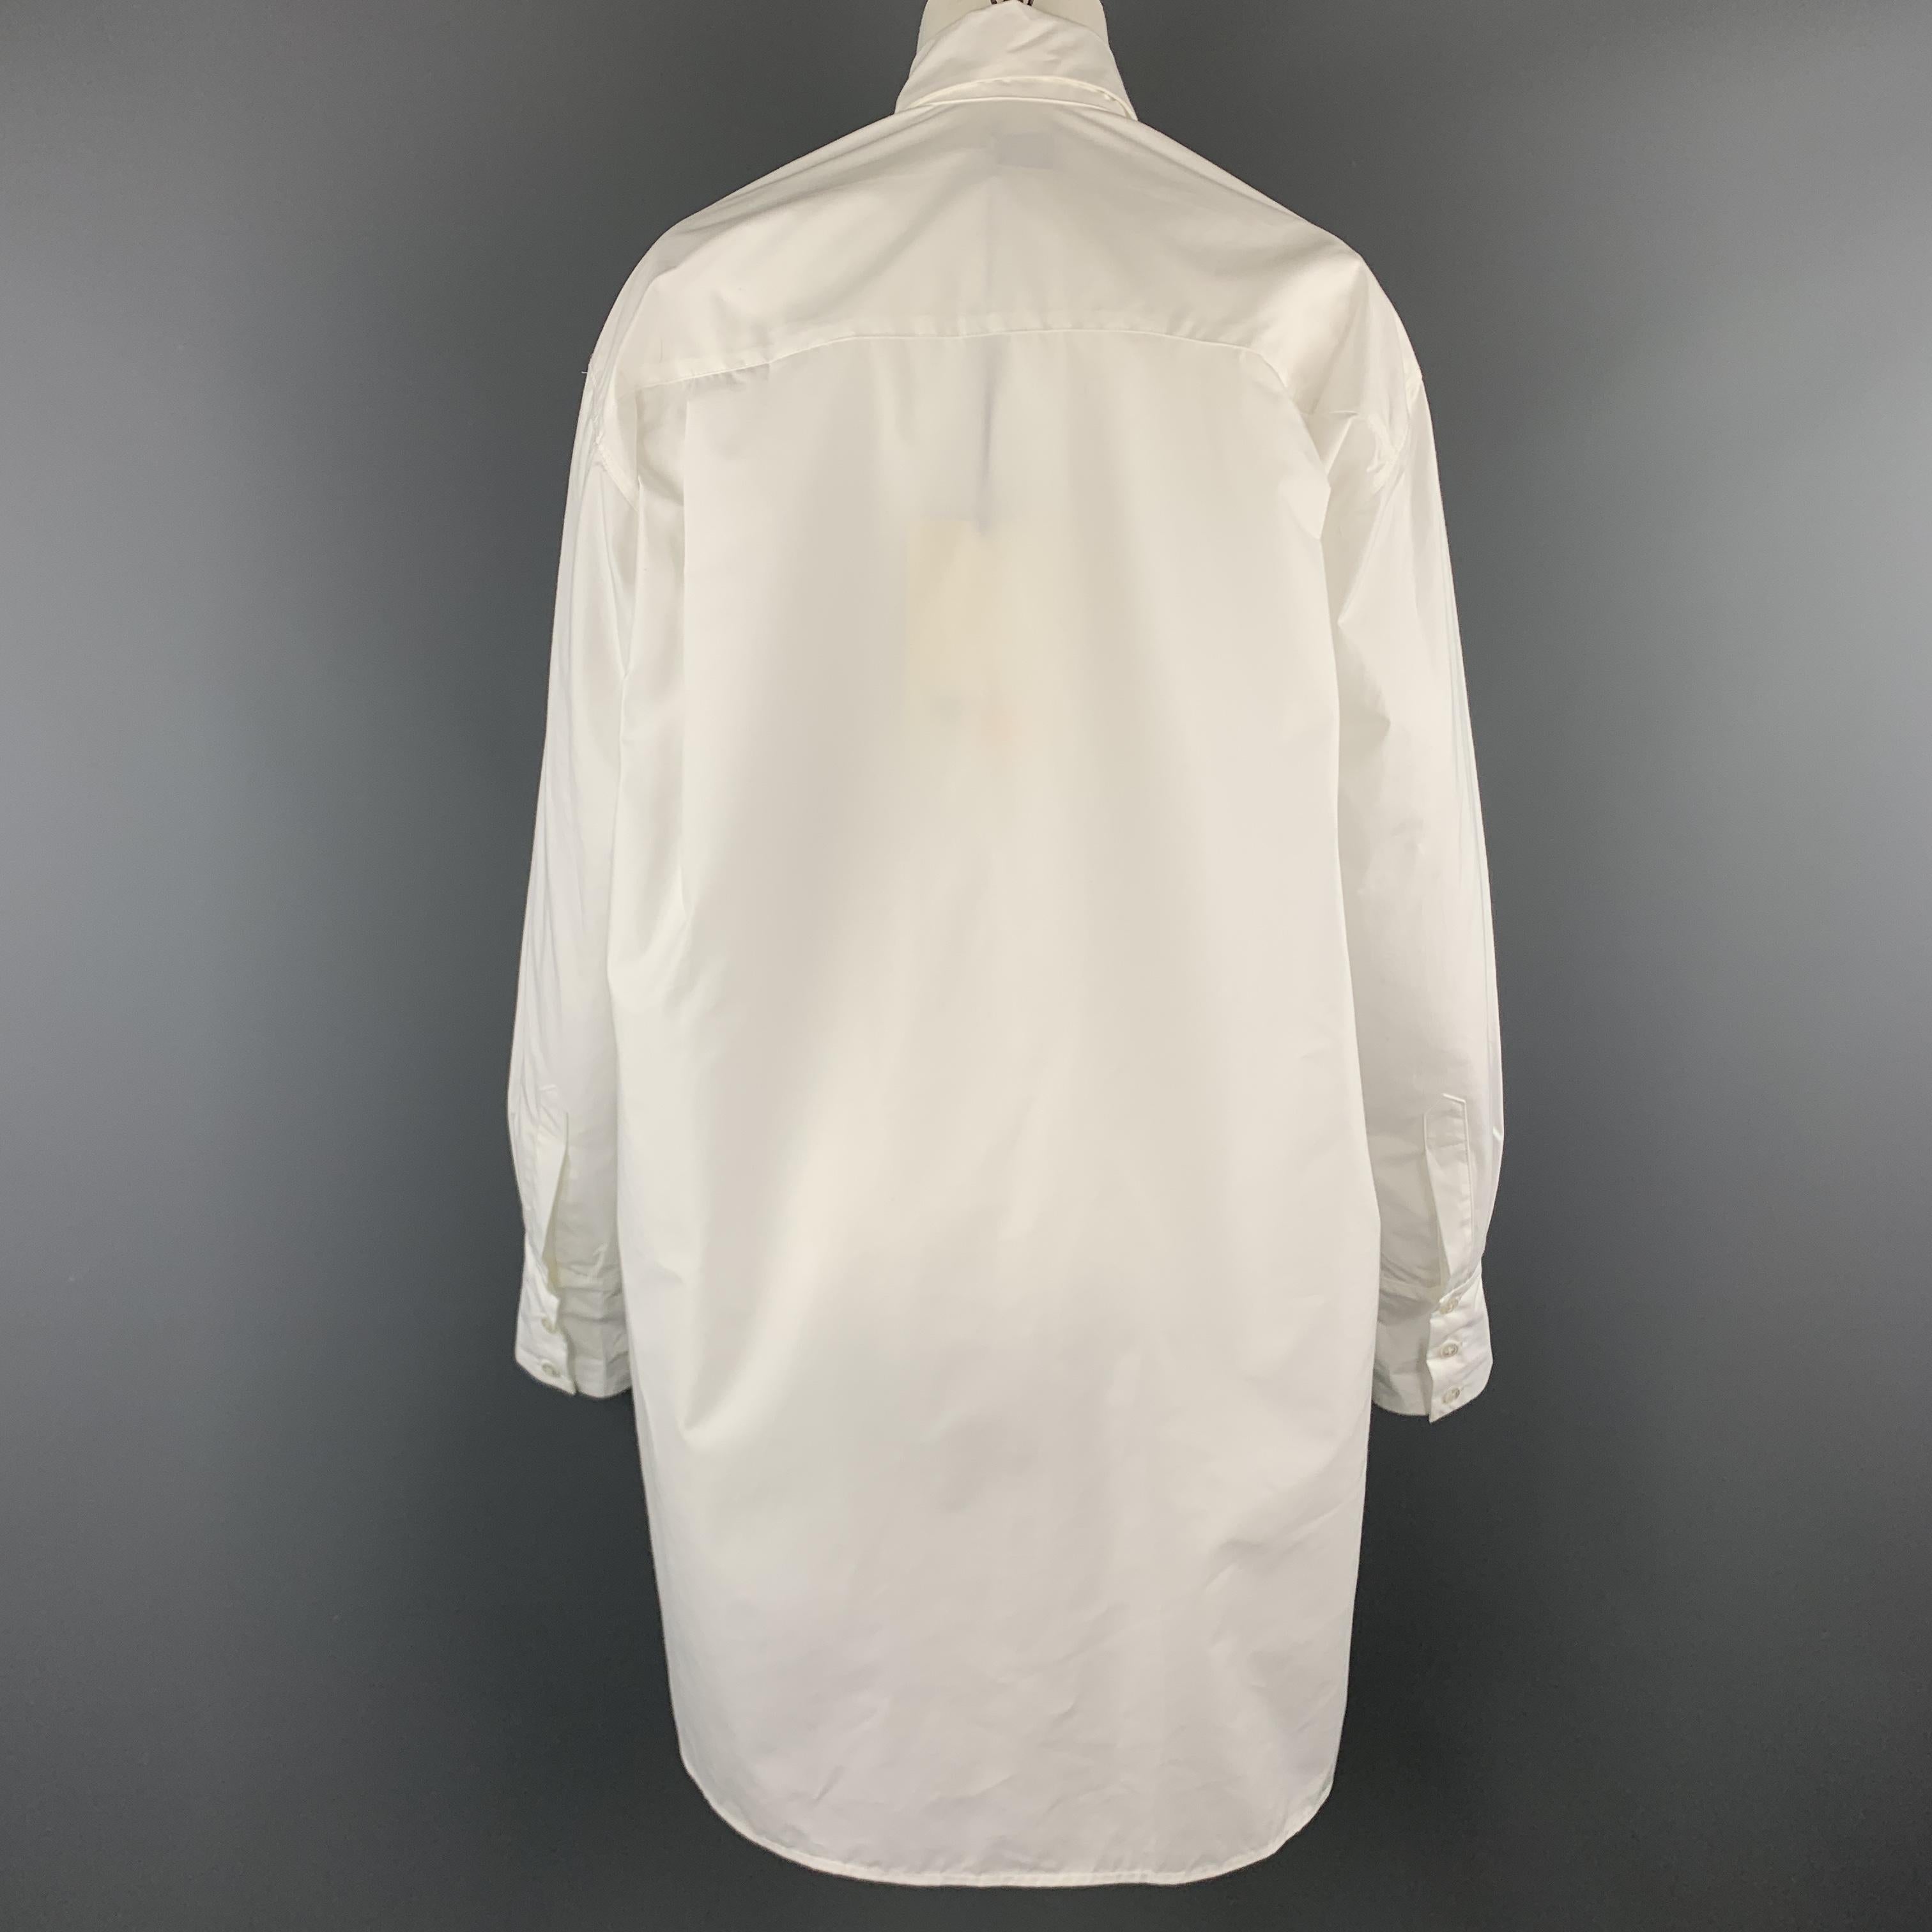 DEVEAUX New York Size 8 White Cotton MAX SHIRT Oversized Blouse 1